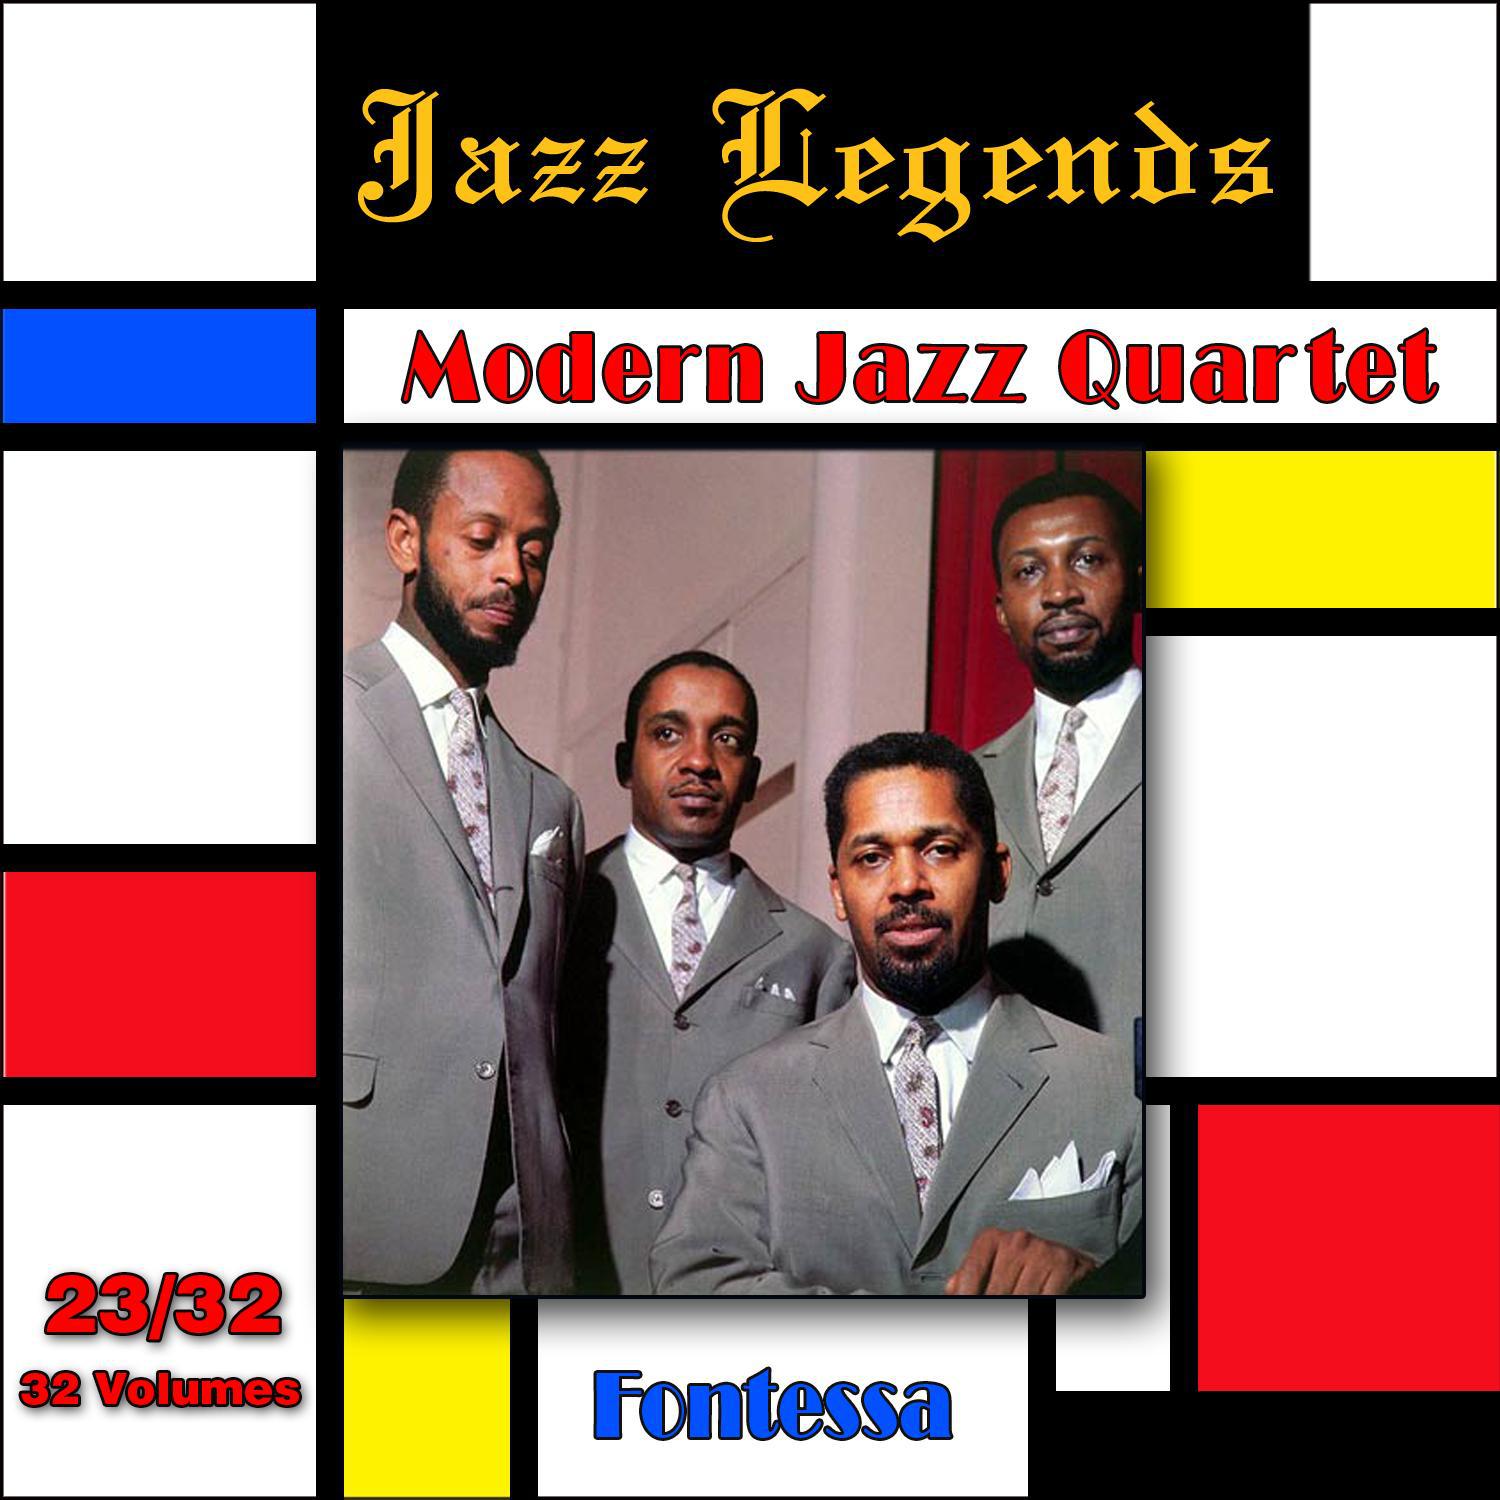 Jazz Legends Le gendes du Jazz, Vol. 23 32: The Modern Jazz Quartet  Fontessa